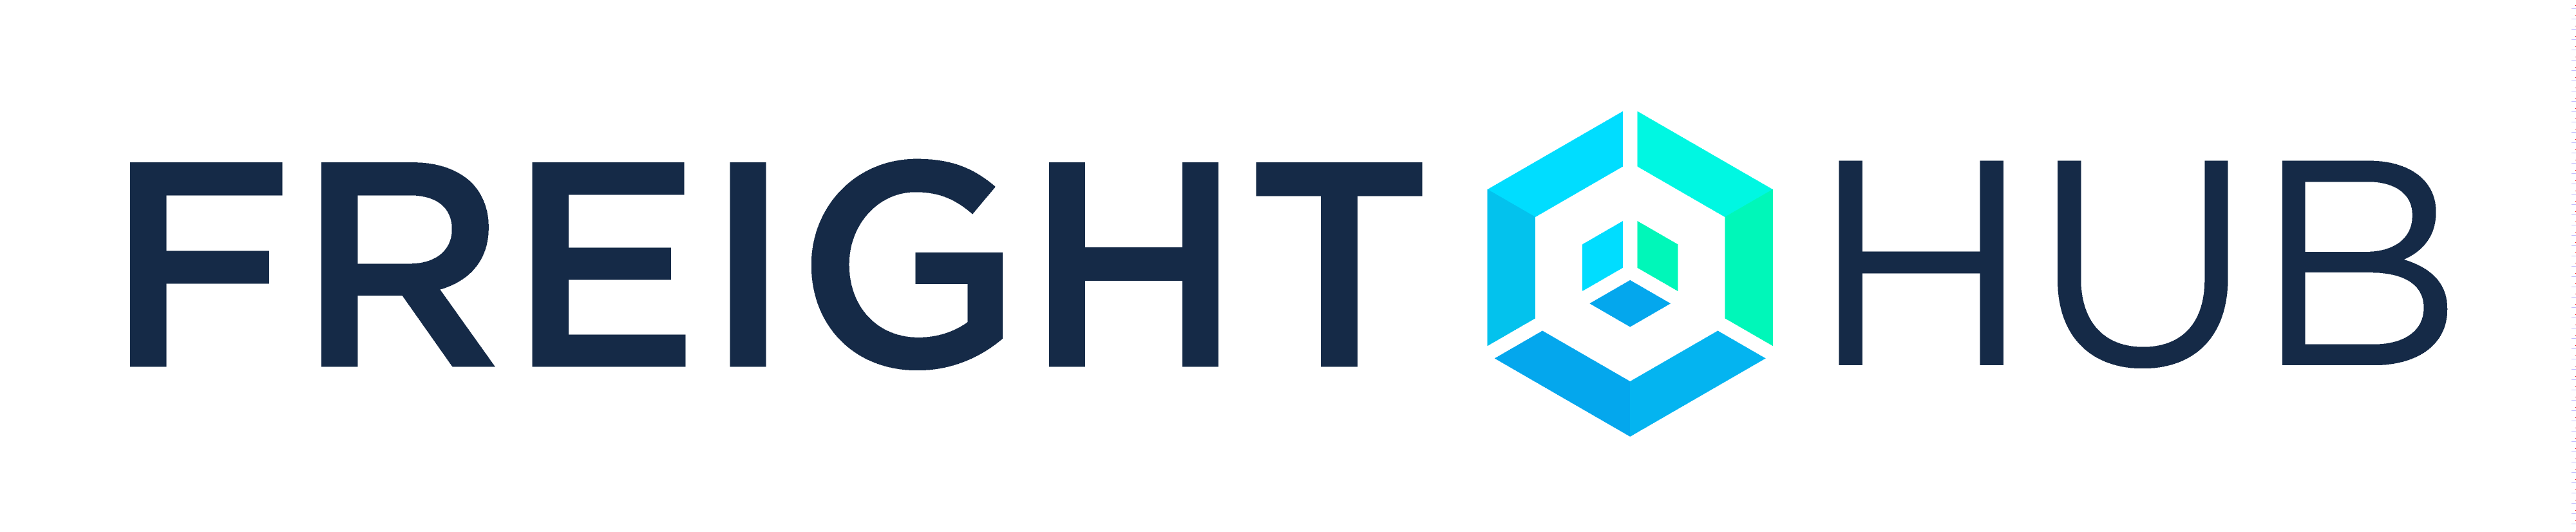 Freight Hub Logo